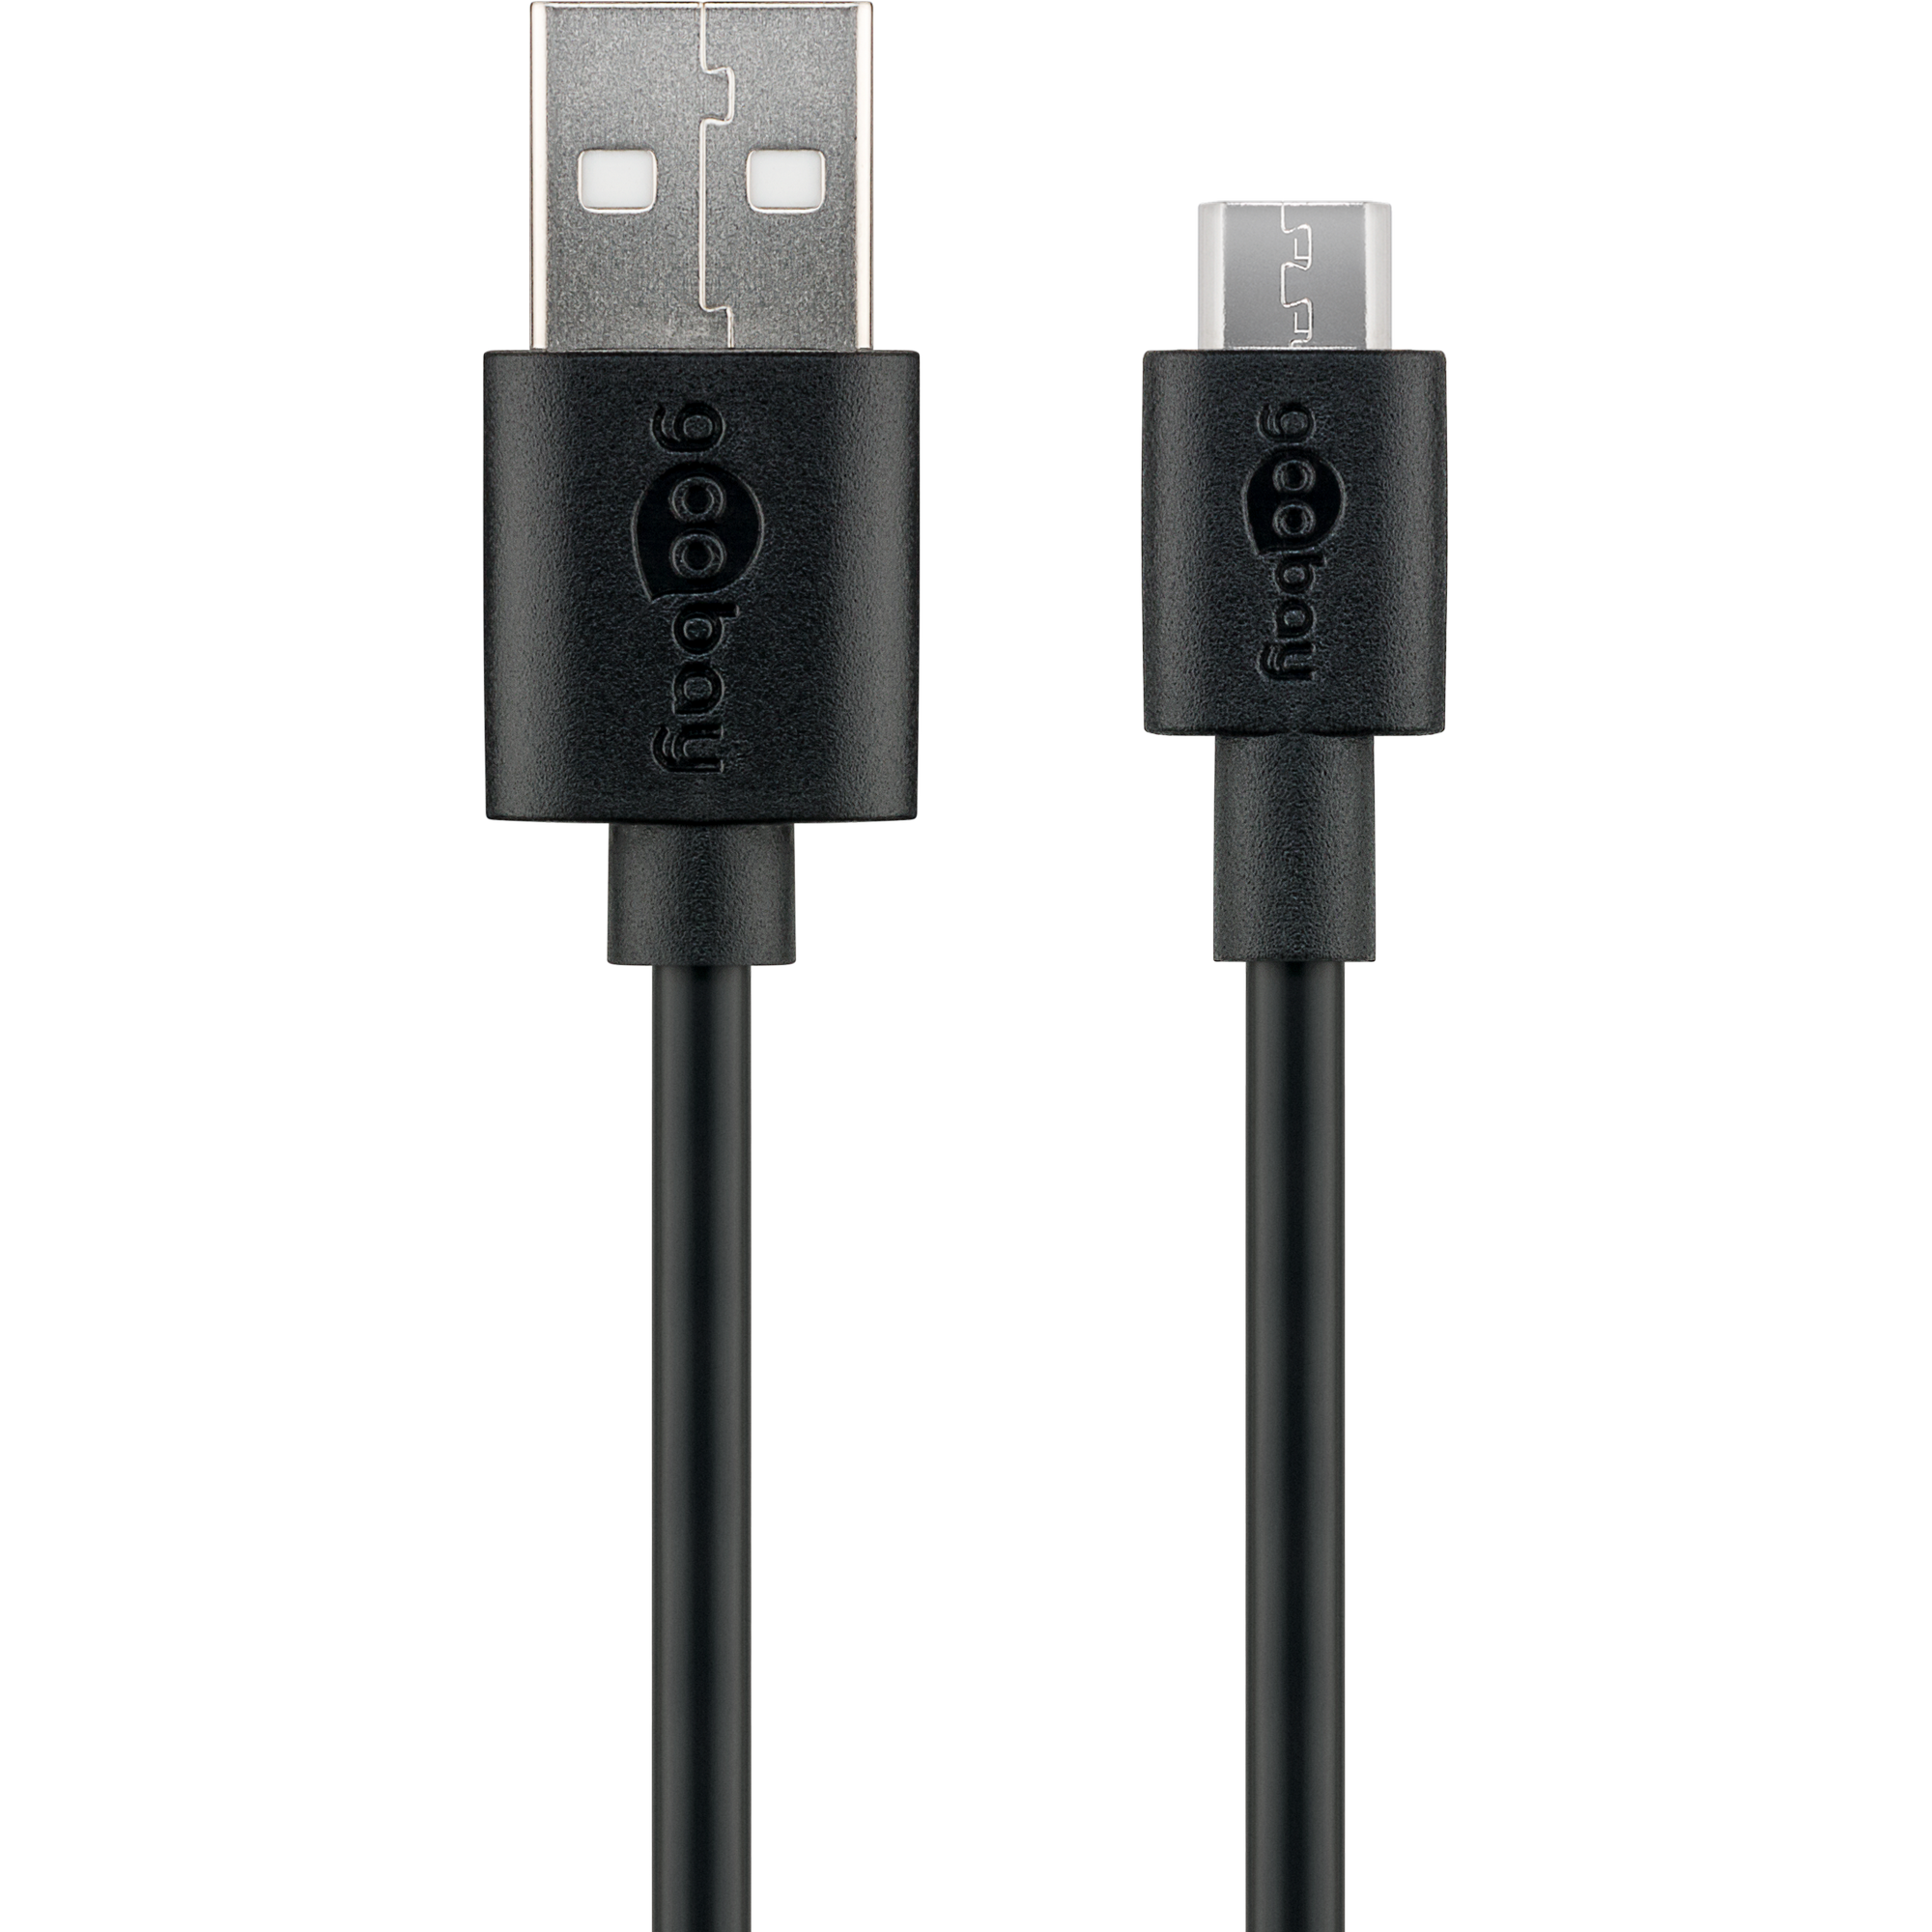 Dual-USB-Ladegerät, MicroUSB Ladekabel + product picture